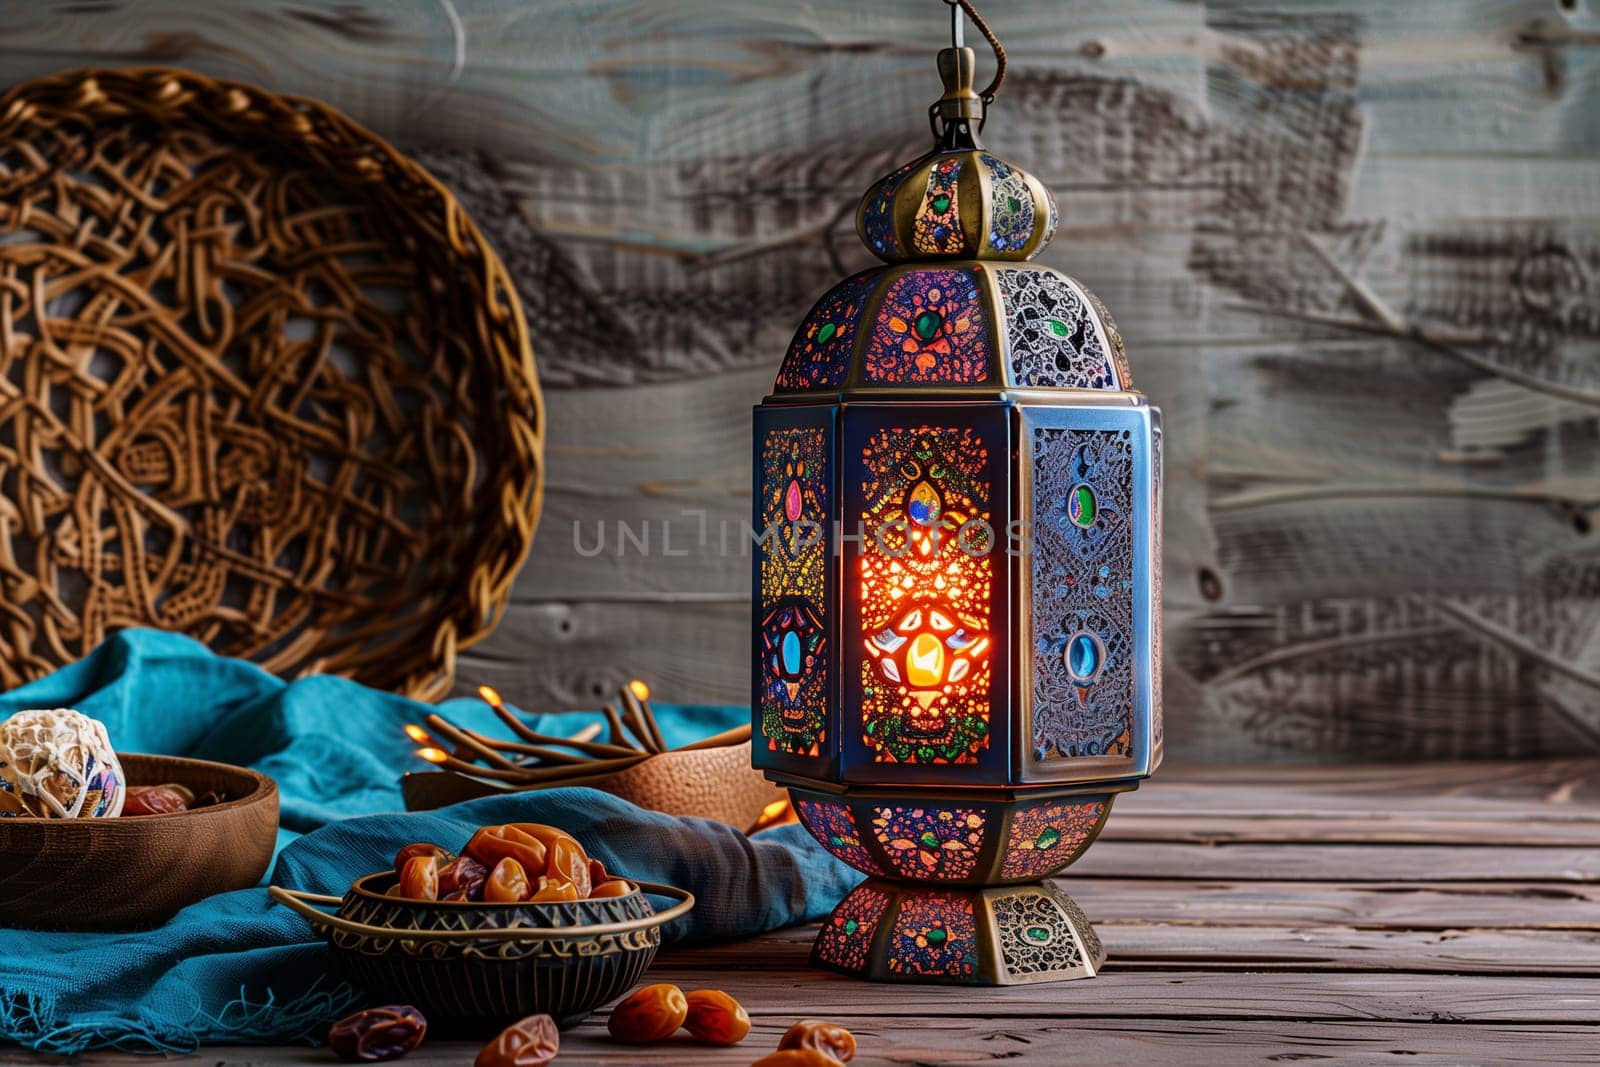 Traditional Islamic Lantern Illuminating a Rustic Table During Ramadan by Sd28DimoN_1976